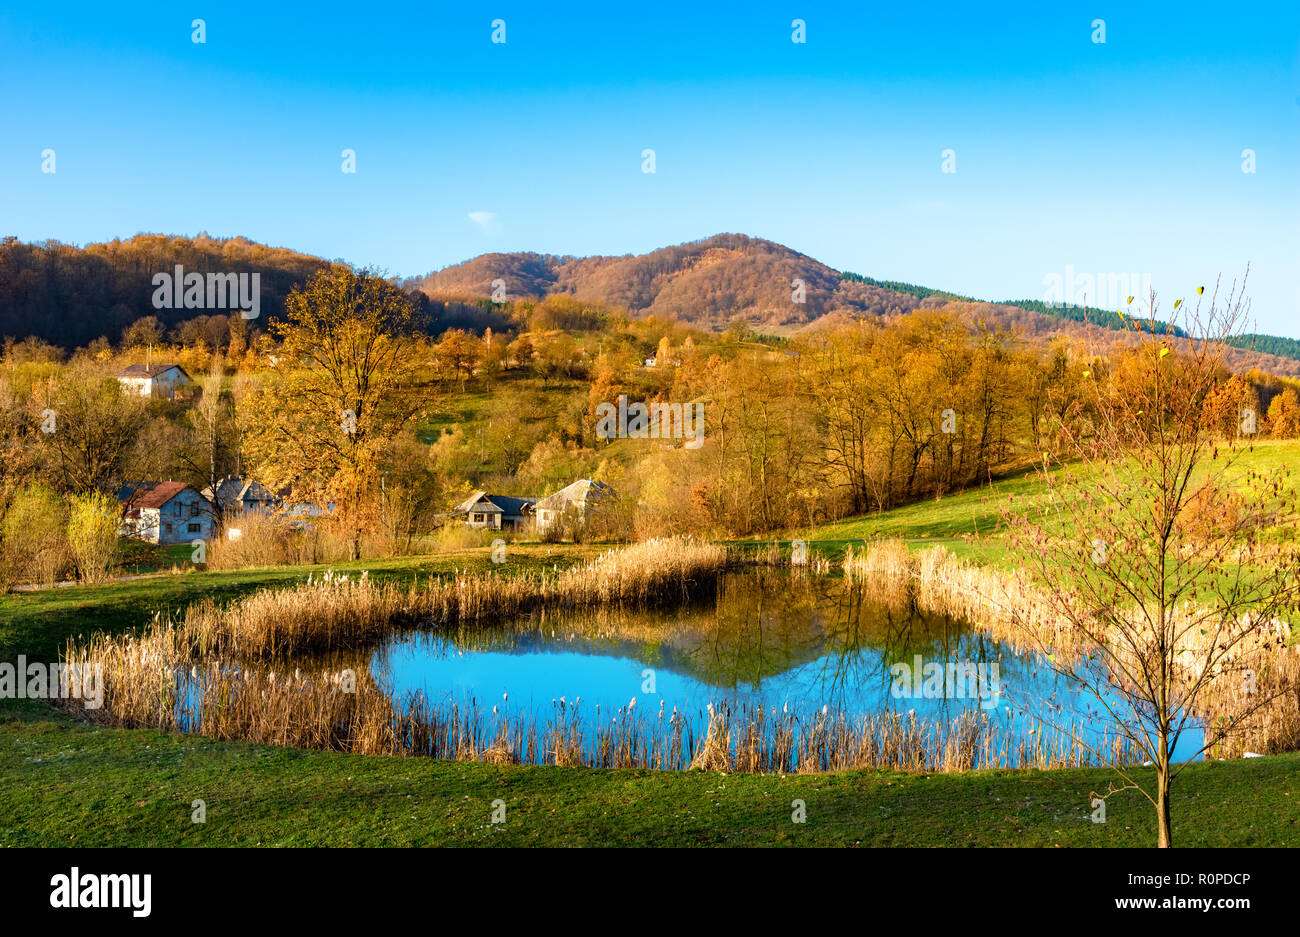 Beautiful autumn landscape with traditional houses and a lake in Sighetu Marmatiei, Maramures region - Romania Stock Photo